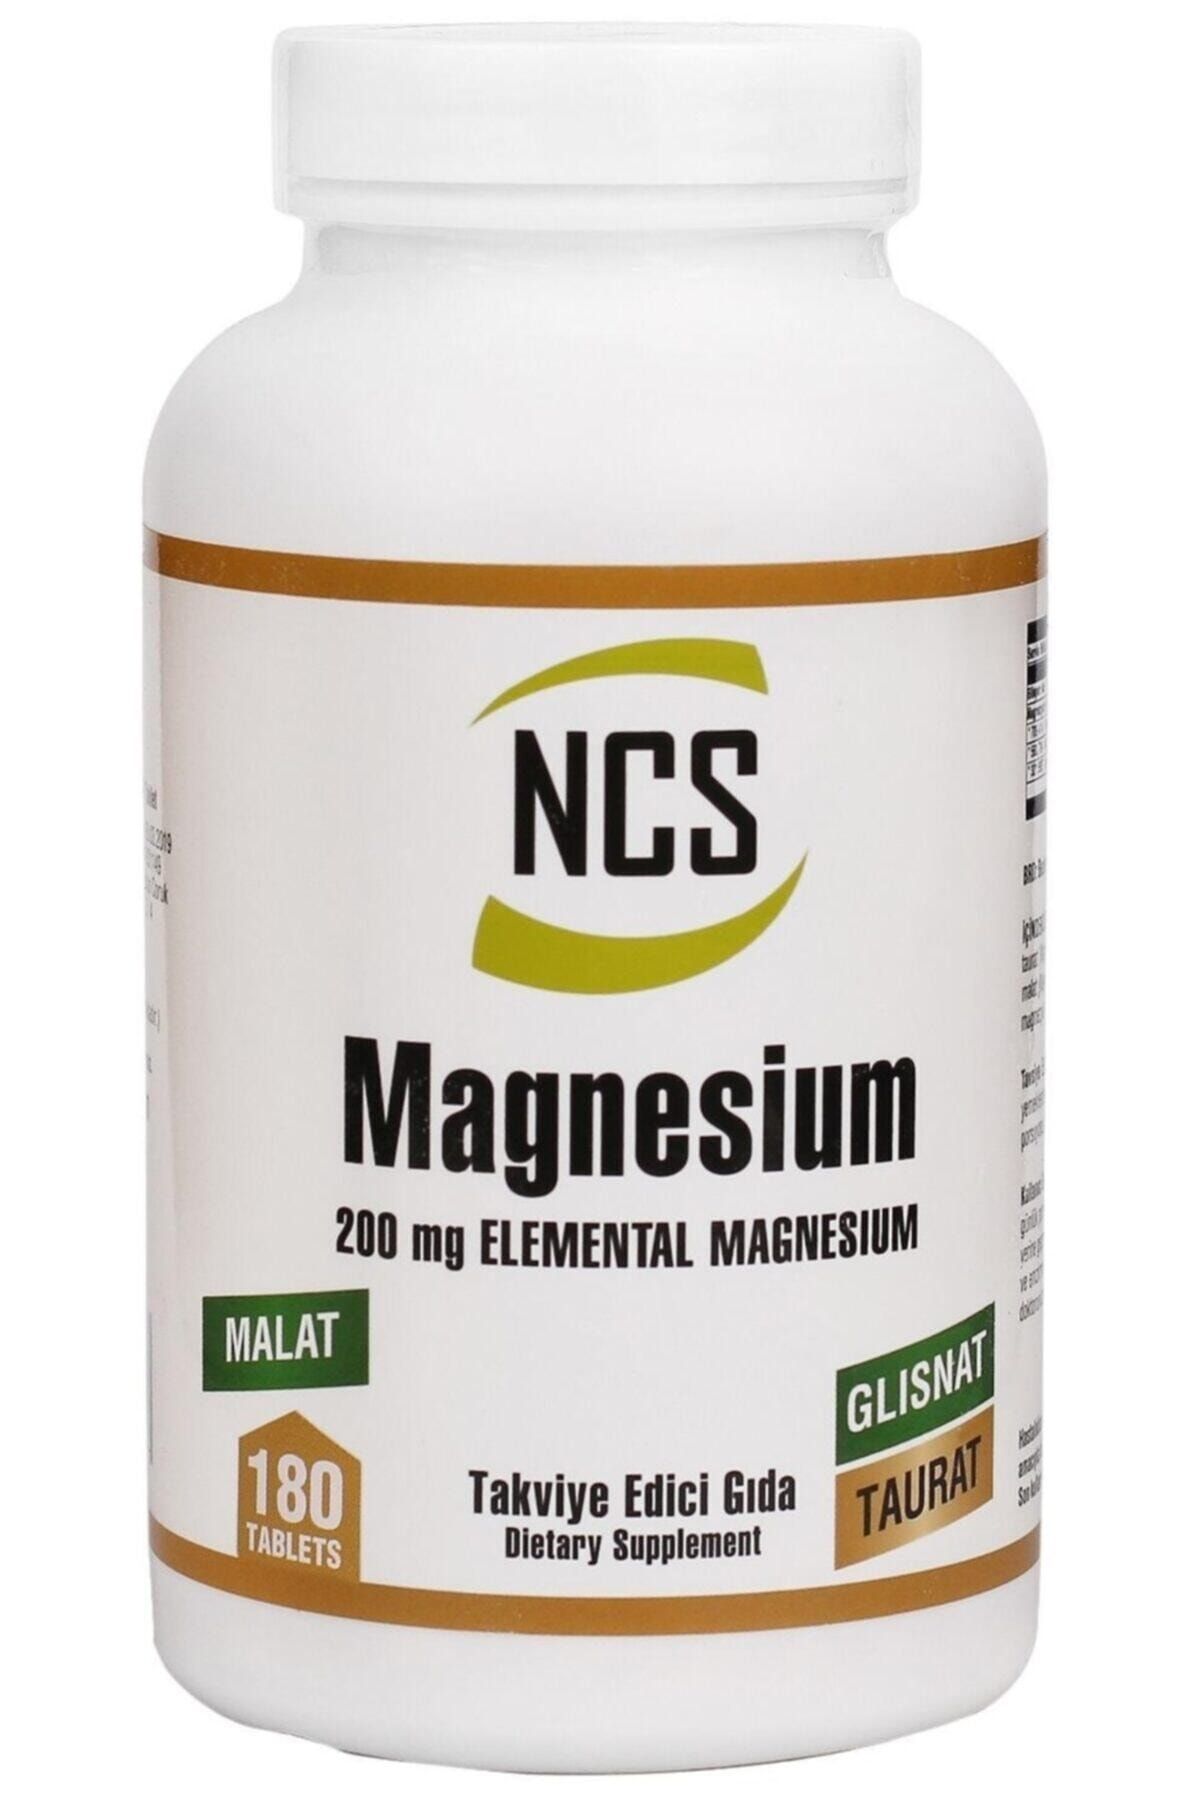 Ncs ® Magnesium Bisglisinat Malat Taurat 180 Tablet Magnezyum 200 mg